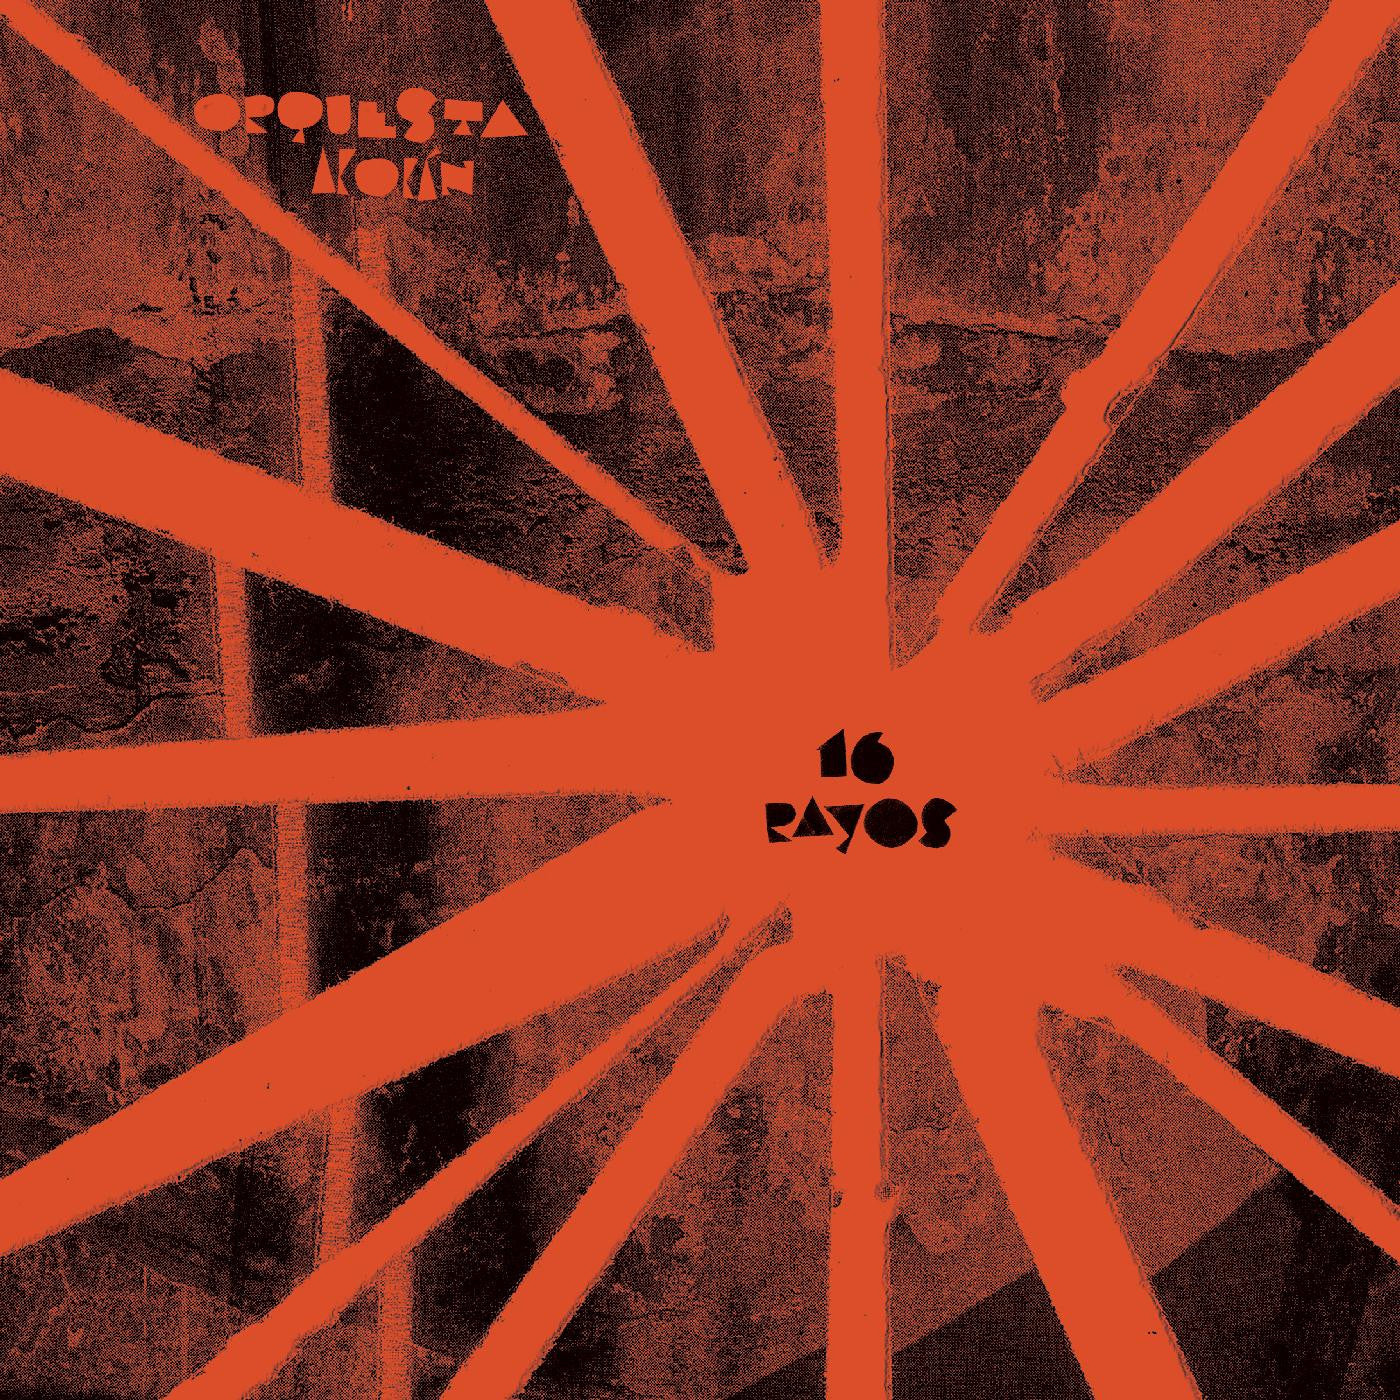 ORQUESTA AKOKAN - 16 RAYOS (Canary Swirl Vinyl) LP